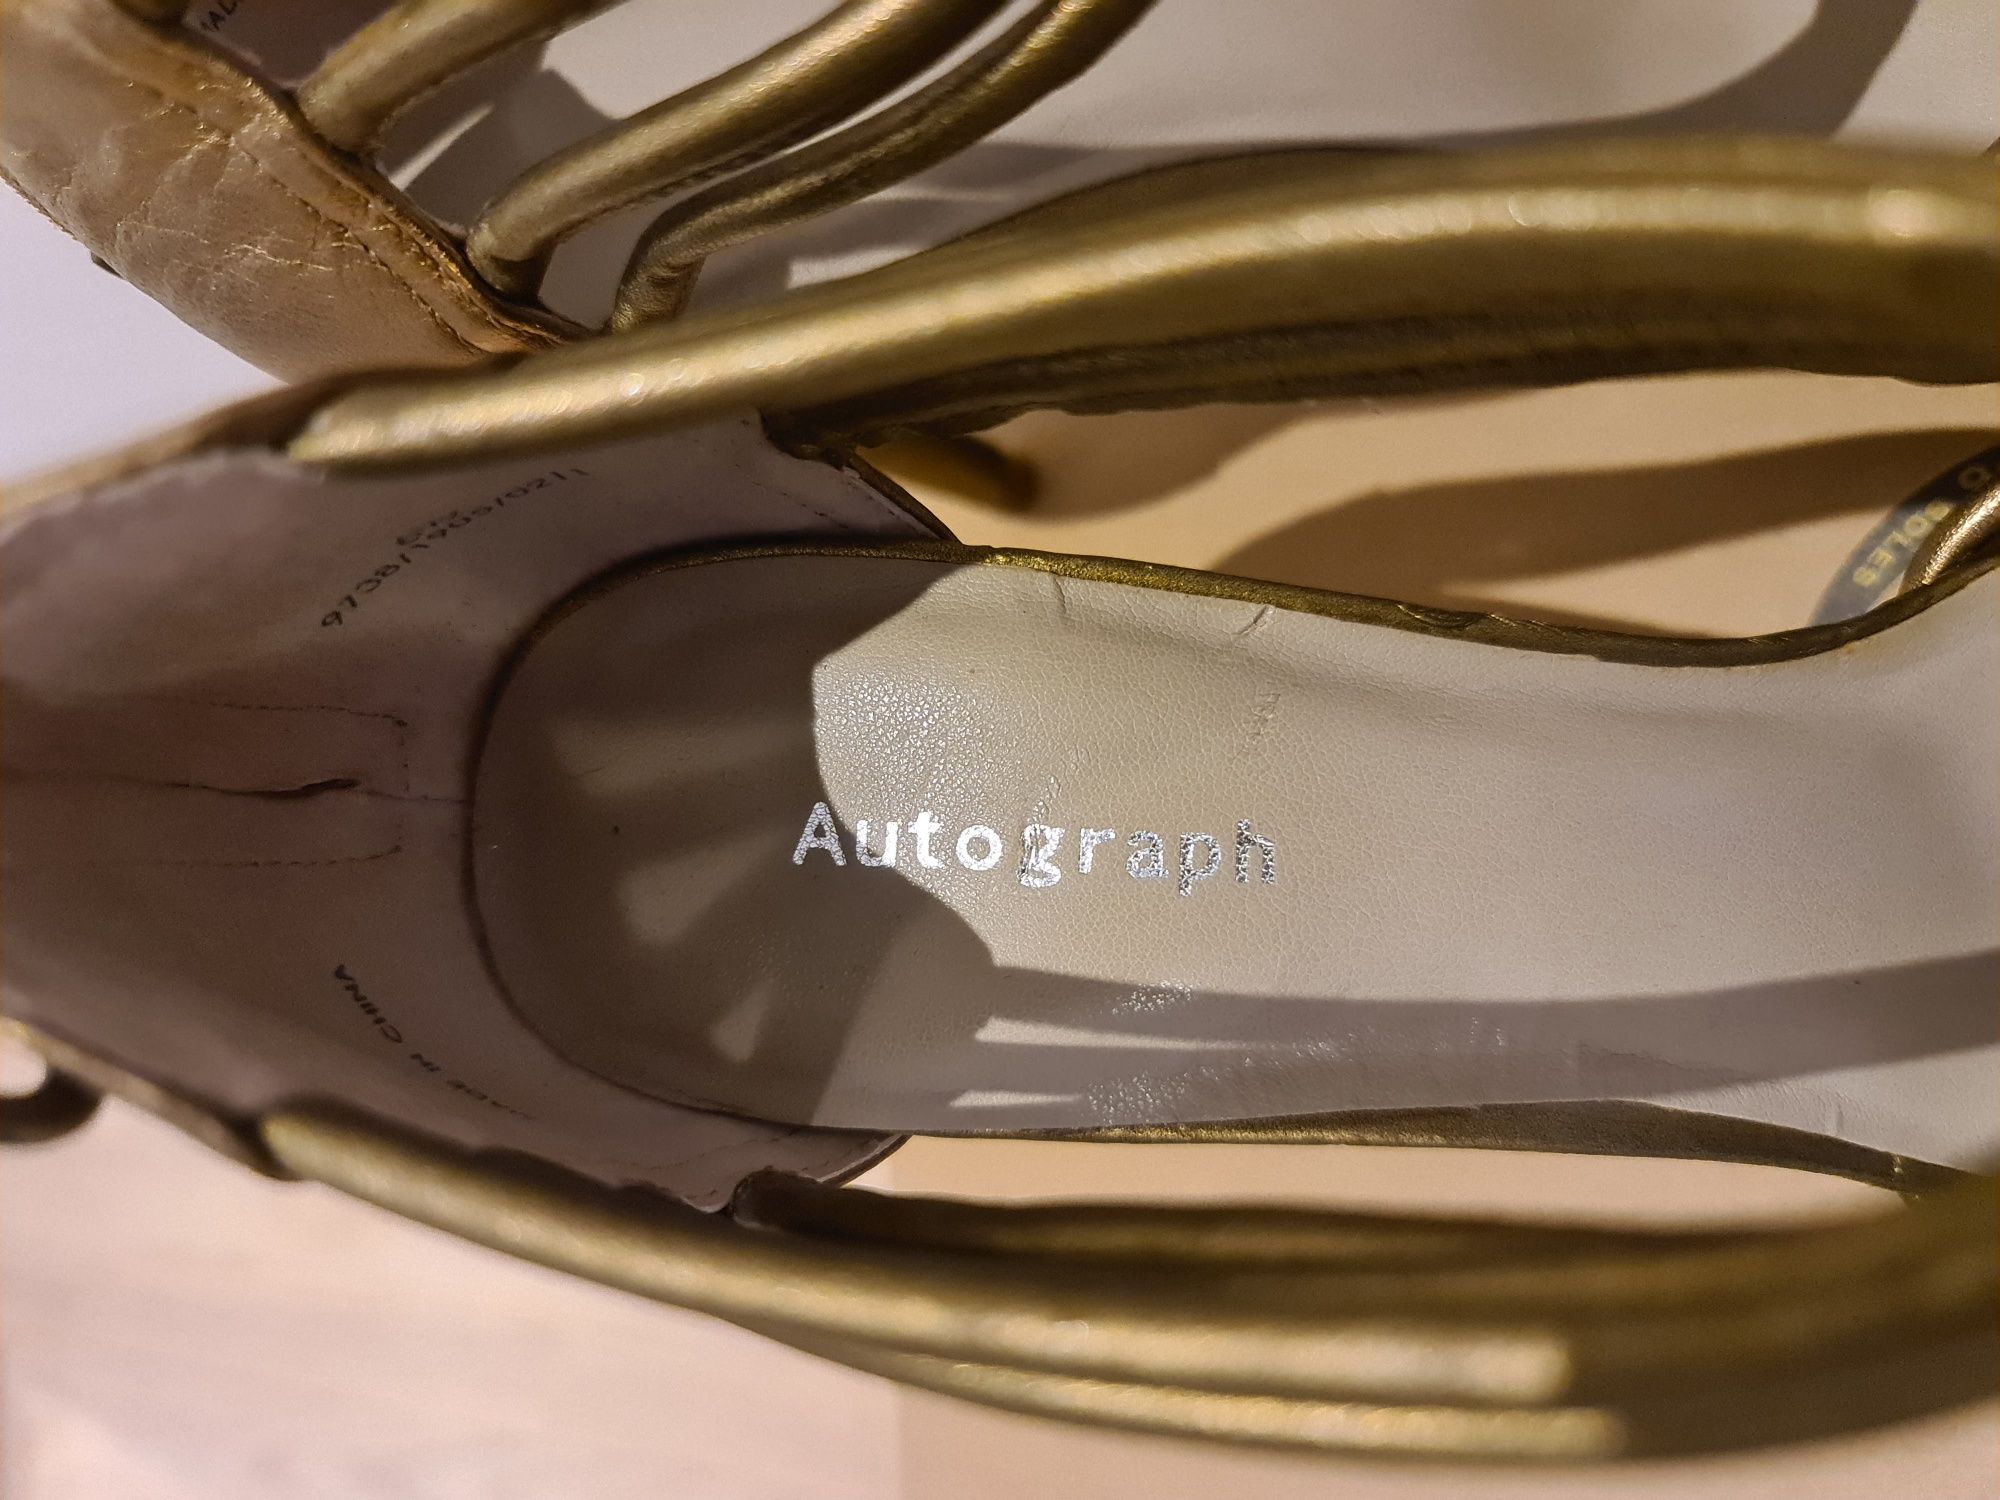 Sandale ocazie bronz auriu, Marks & Spencer 39/39.5